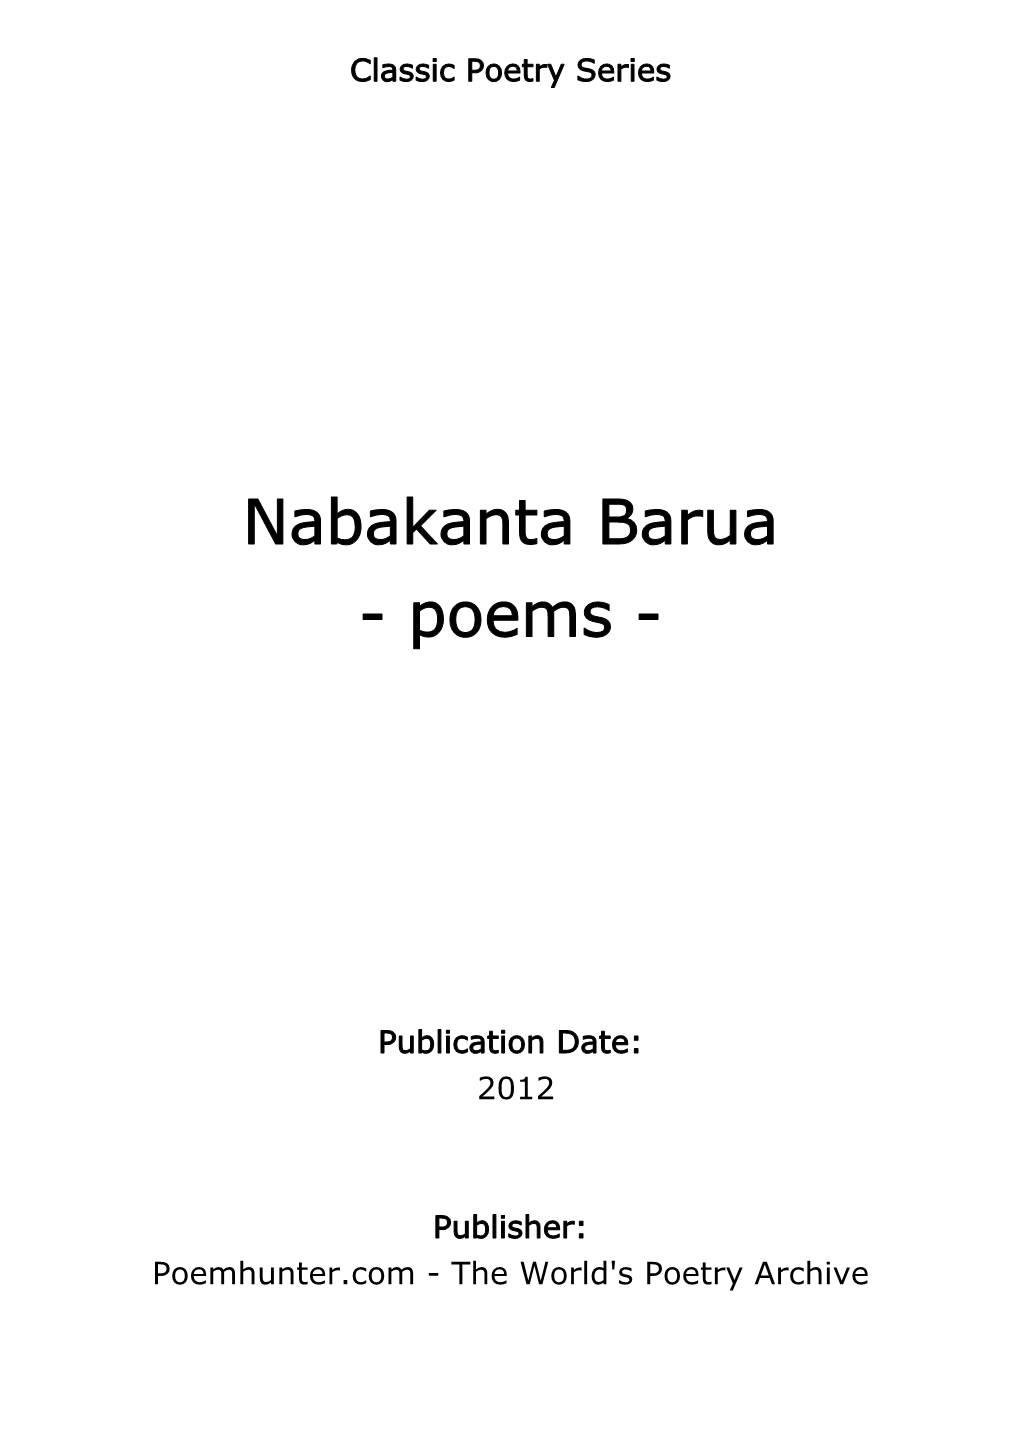 Nabakanta Barua - Poems